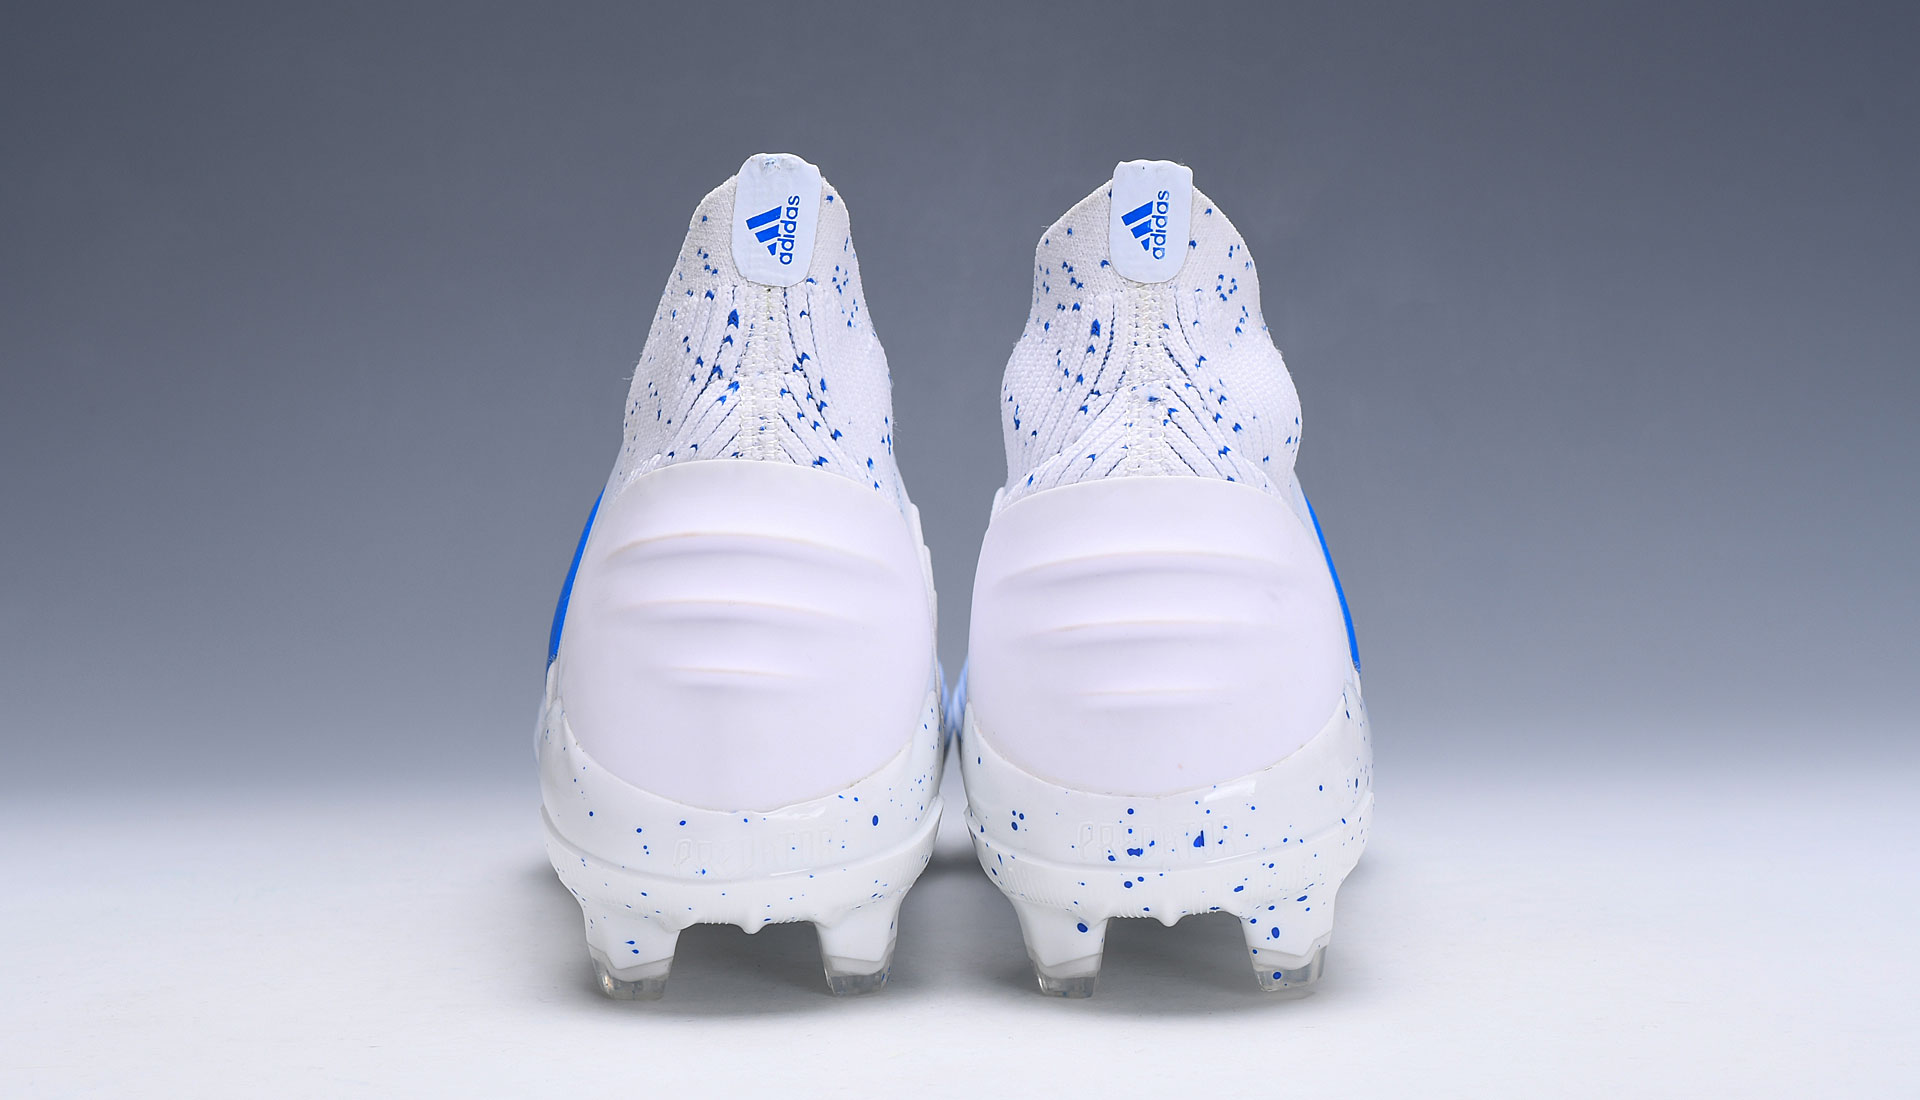 Adidas Predator 19+ FG White Bold Blue - Premium Football Boot